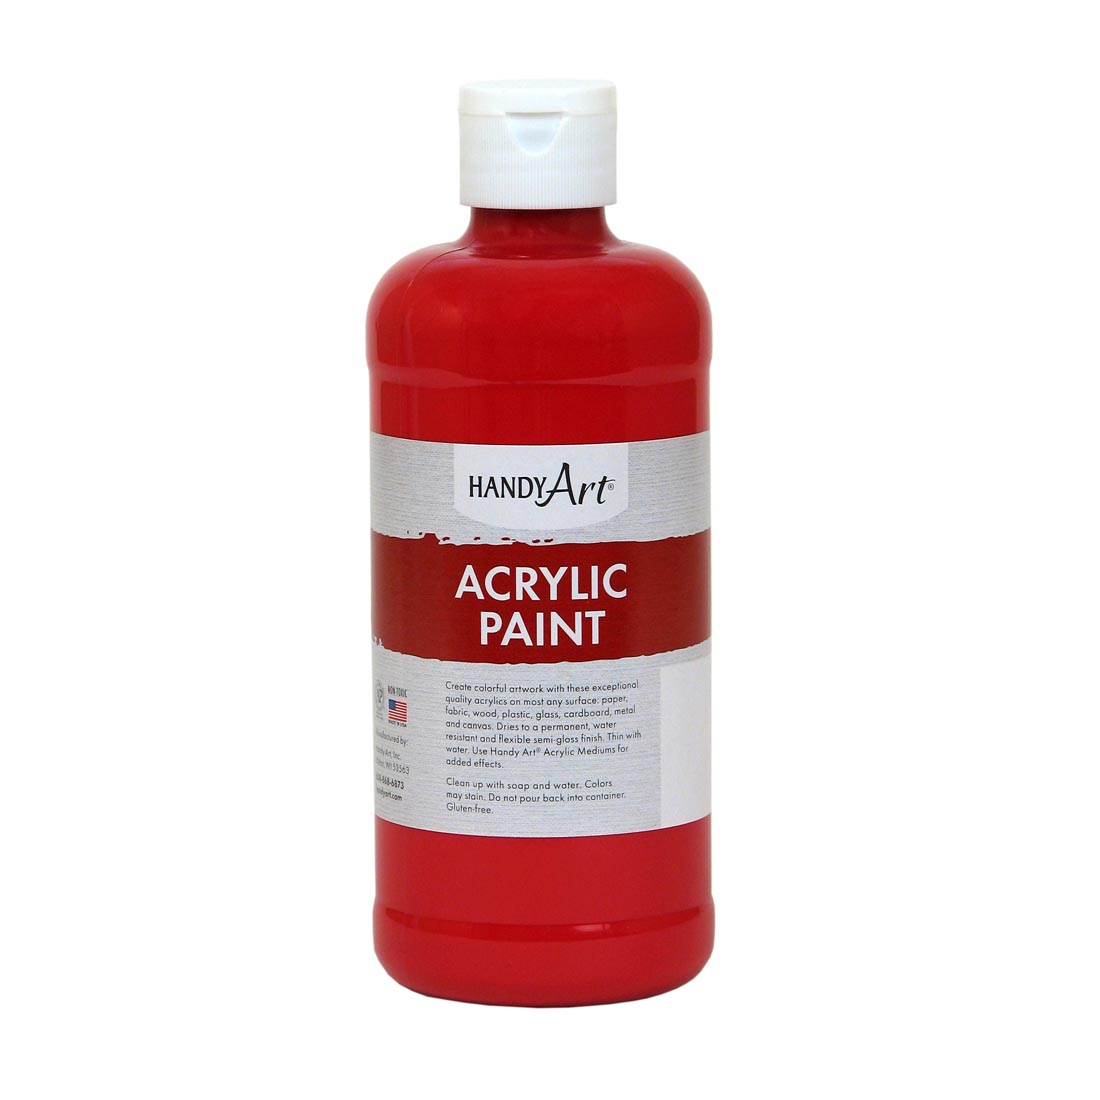 Pint Bottle of Brite Red Handy Art Acrylic Paint